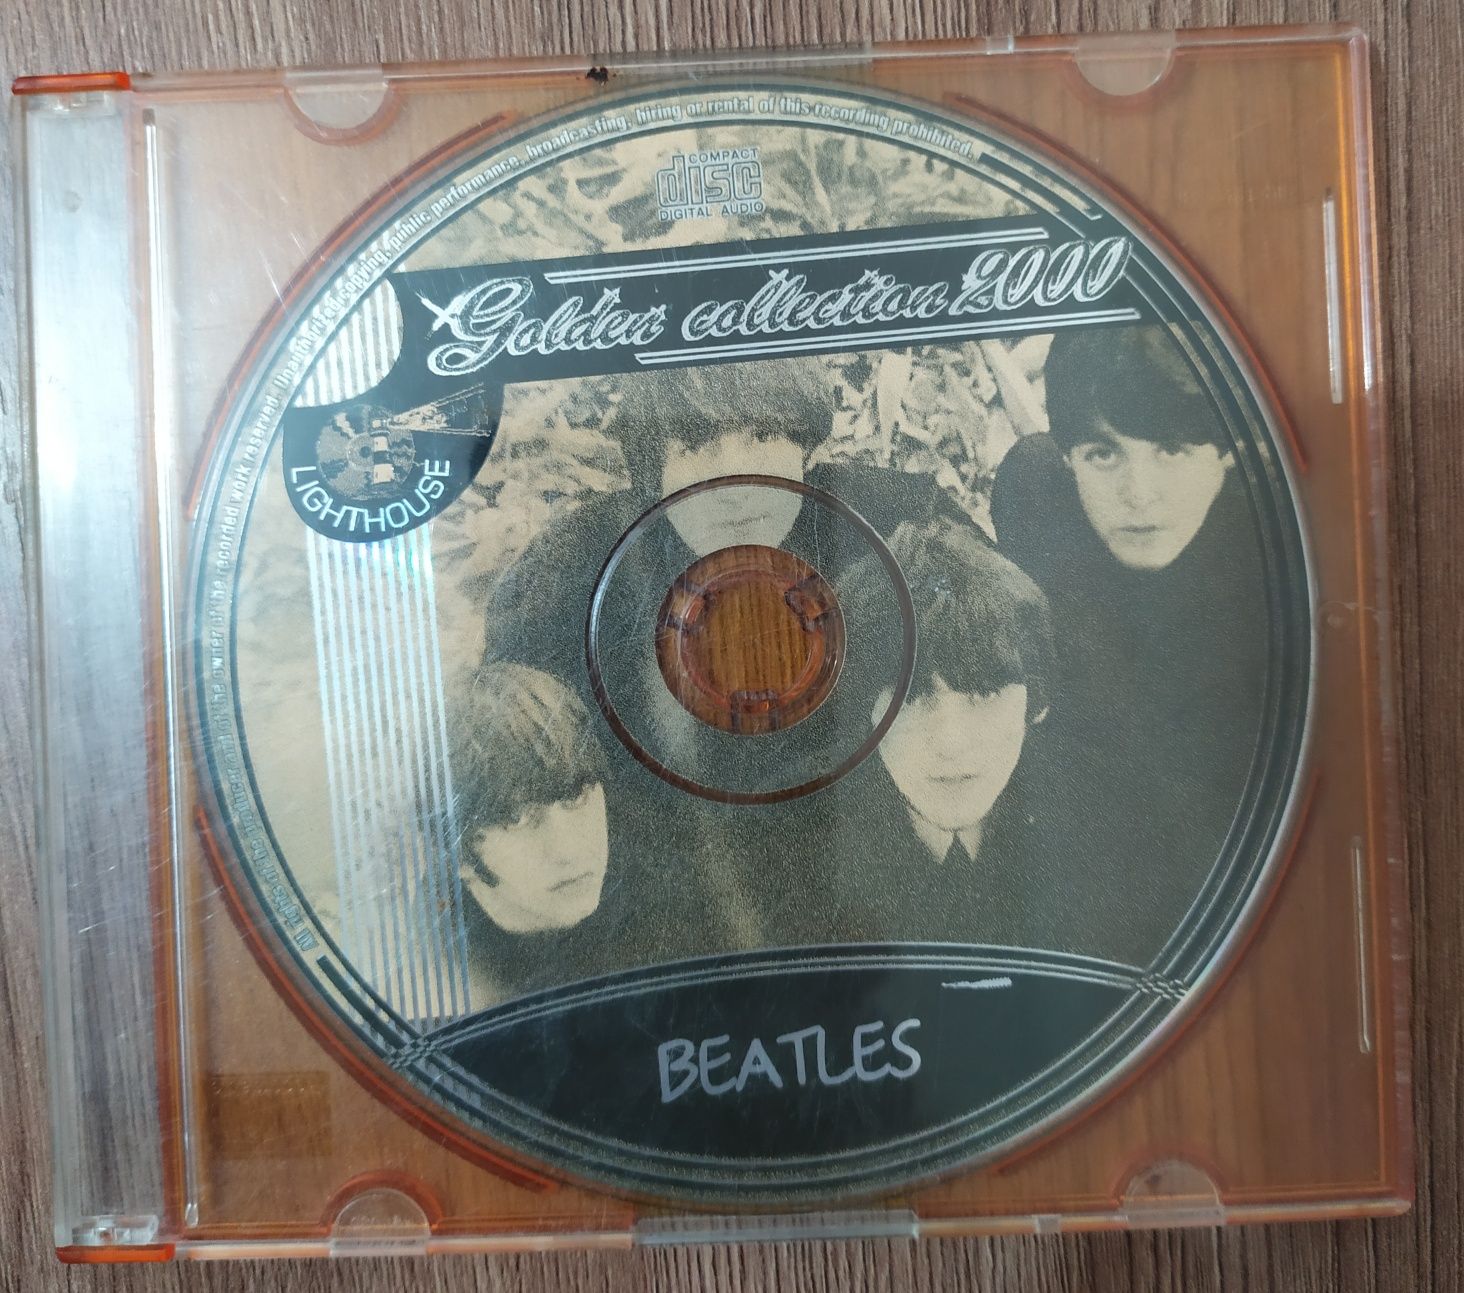 Beatles golden collection 2000